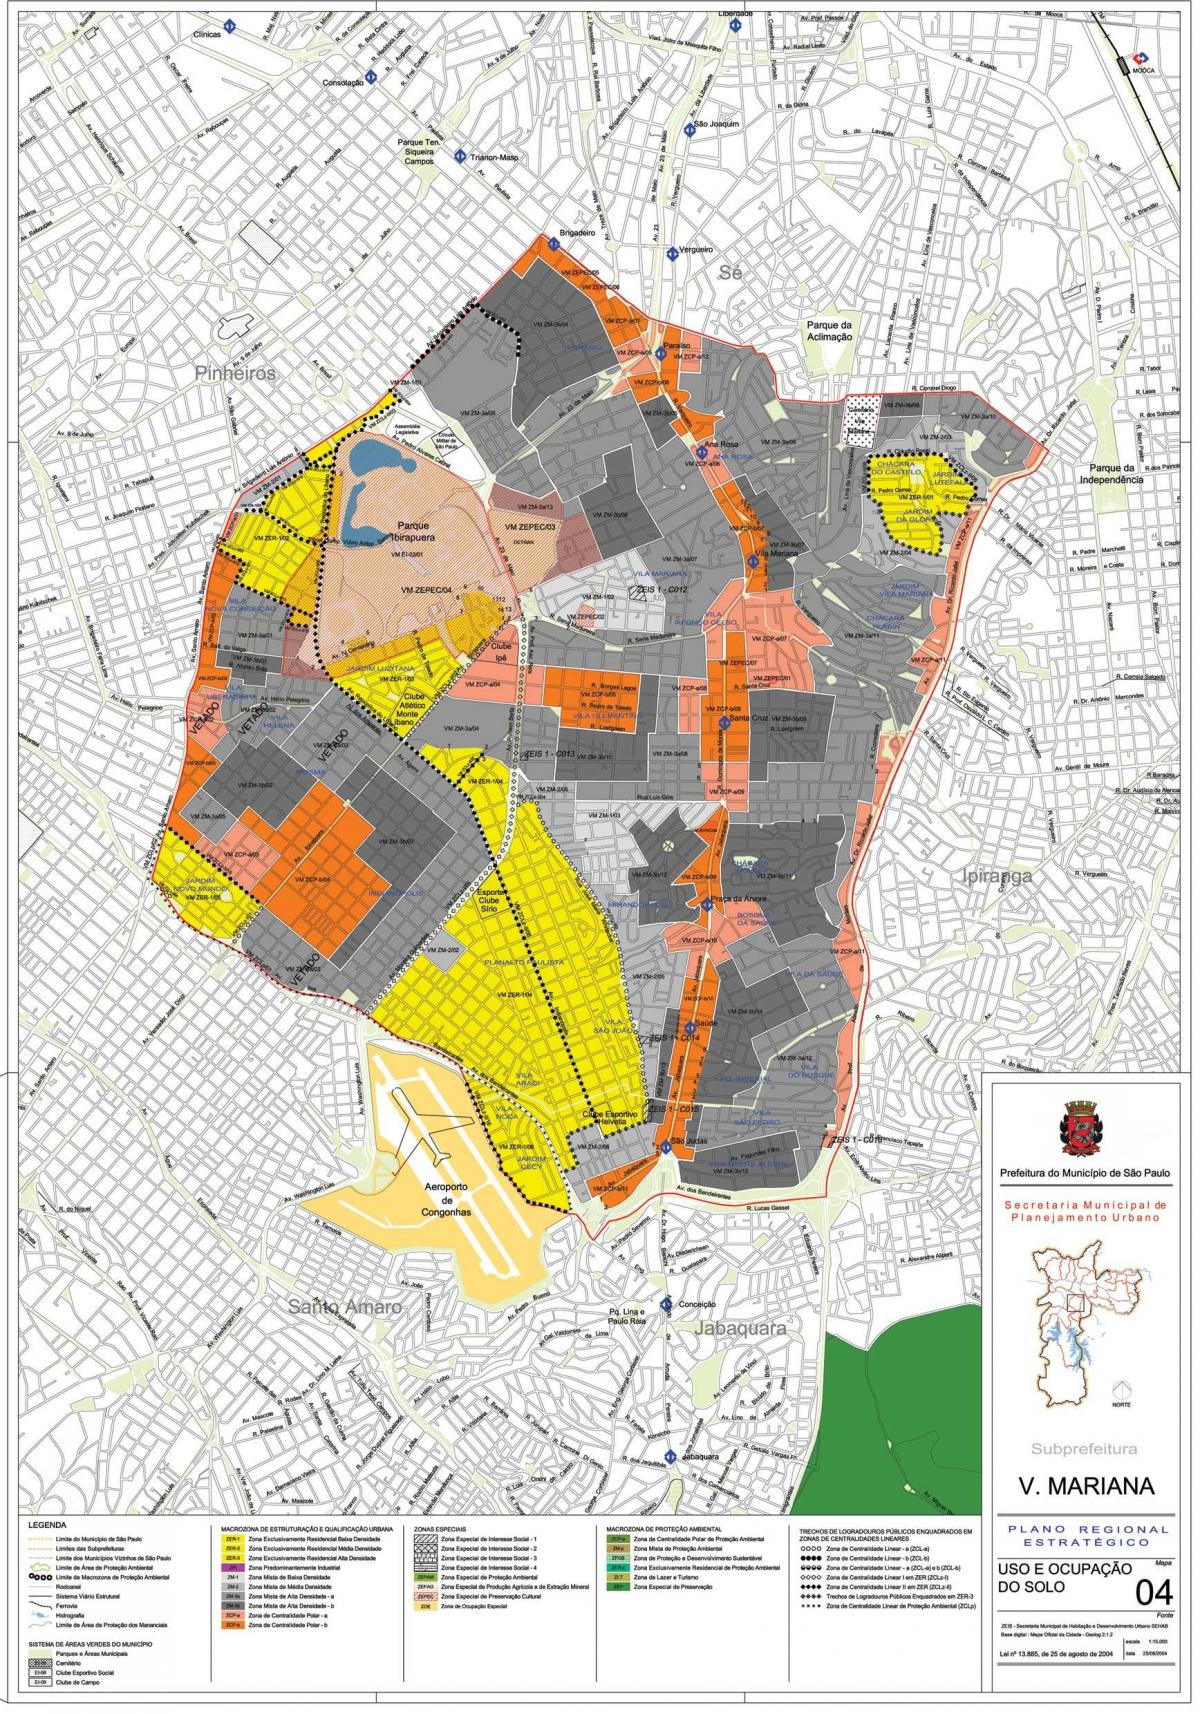 Mapa de Vila Mariana São Paulo - Ocupación do solo